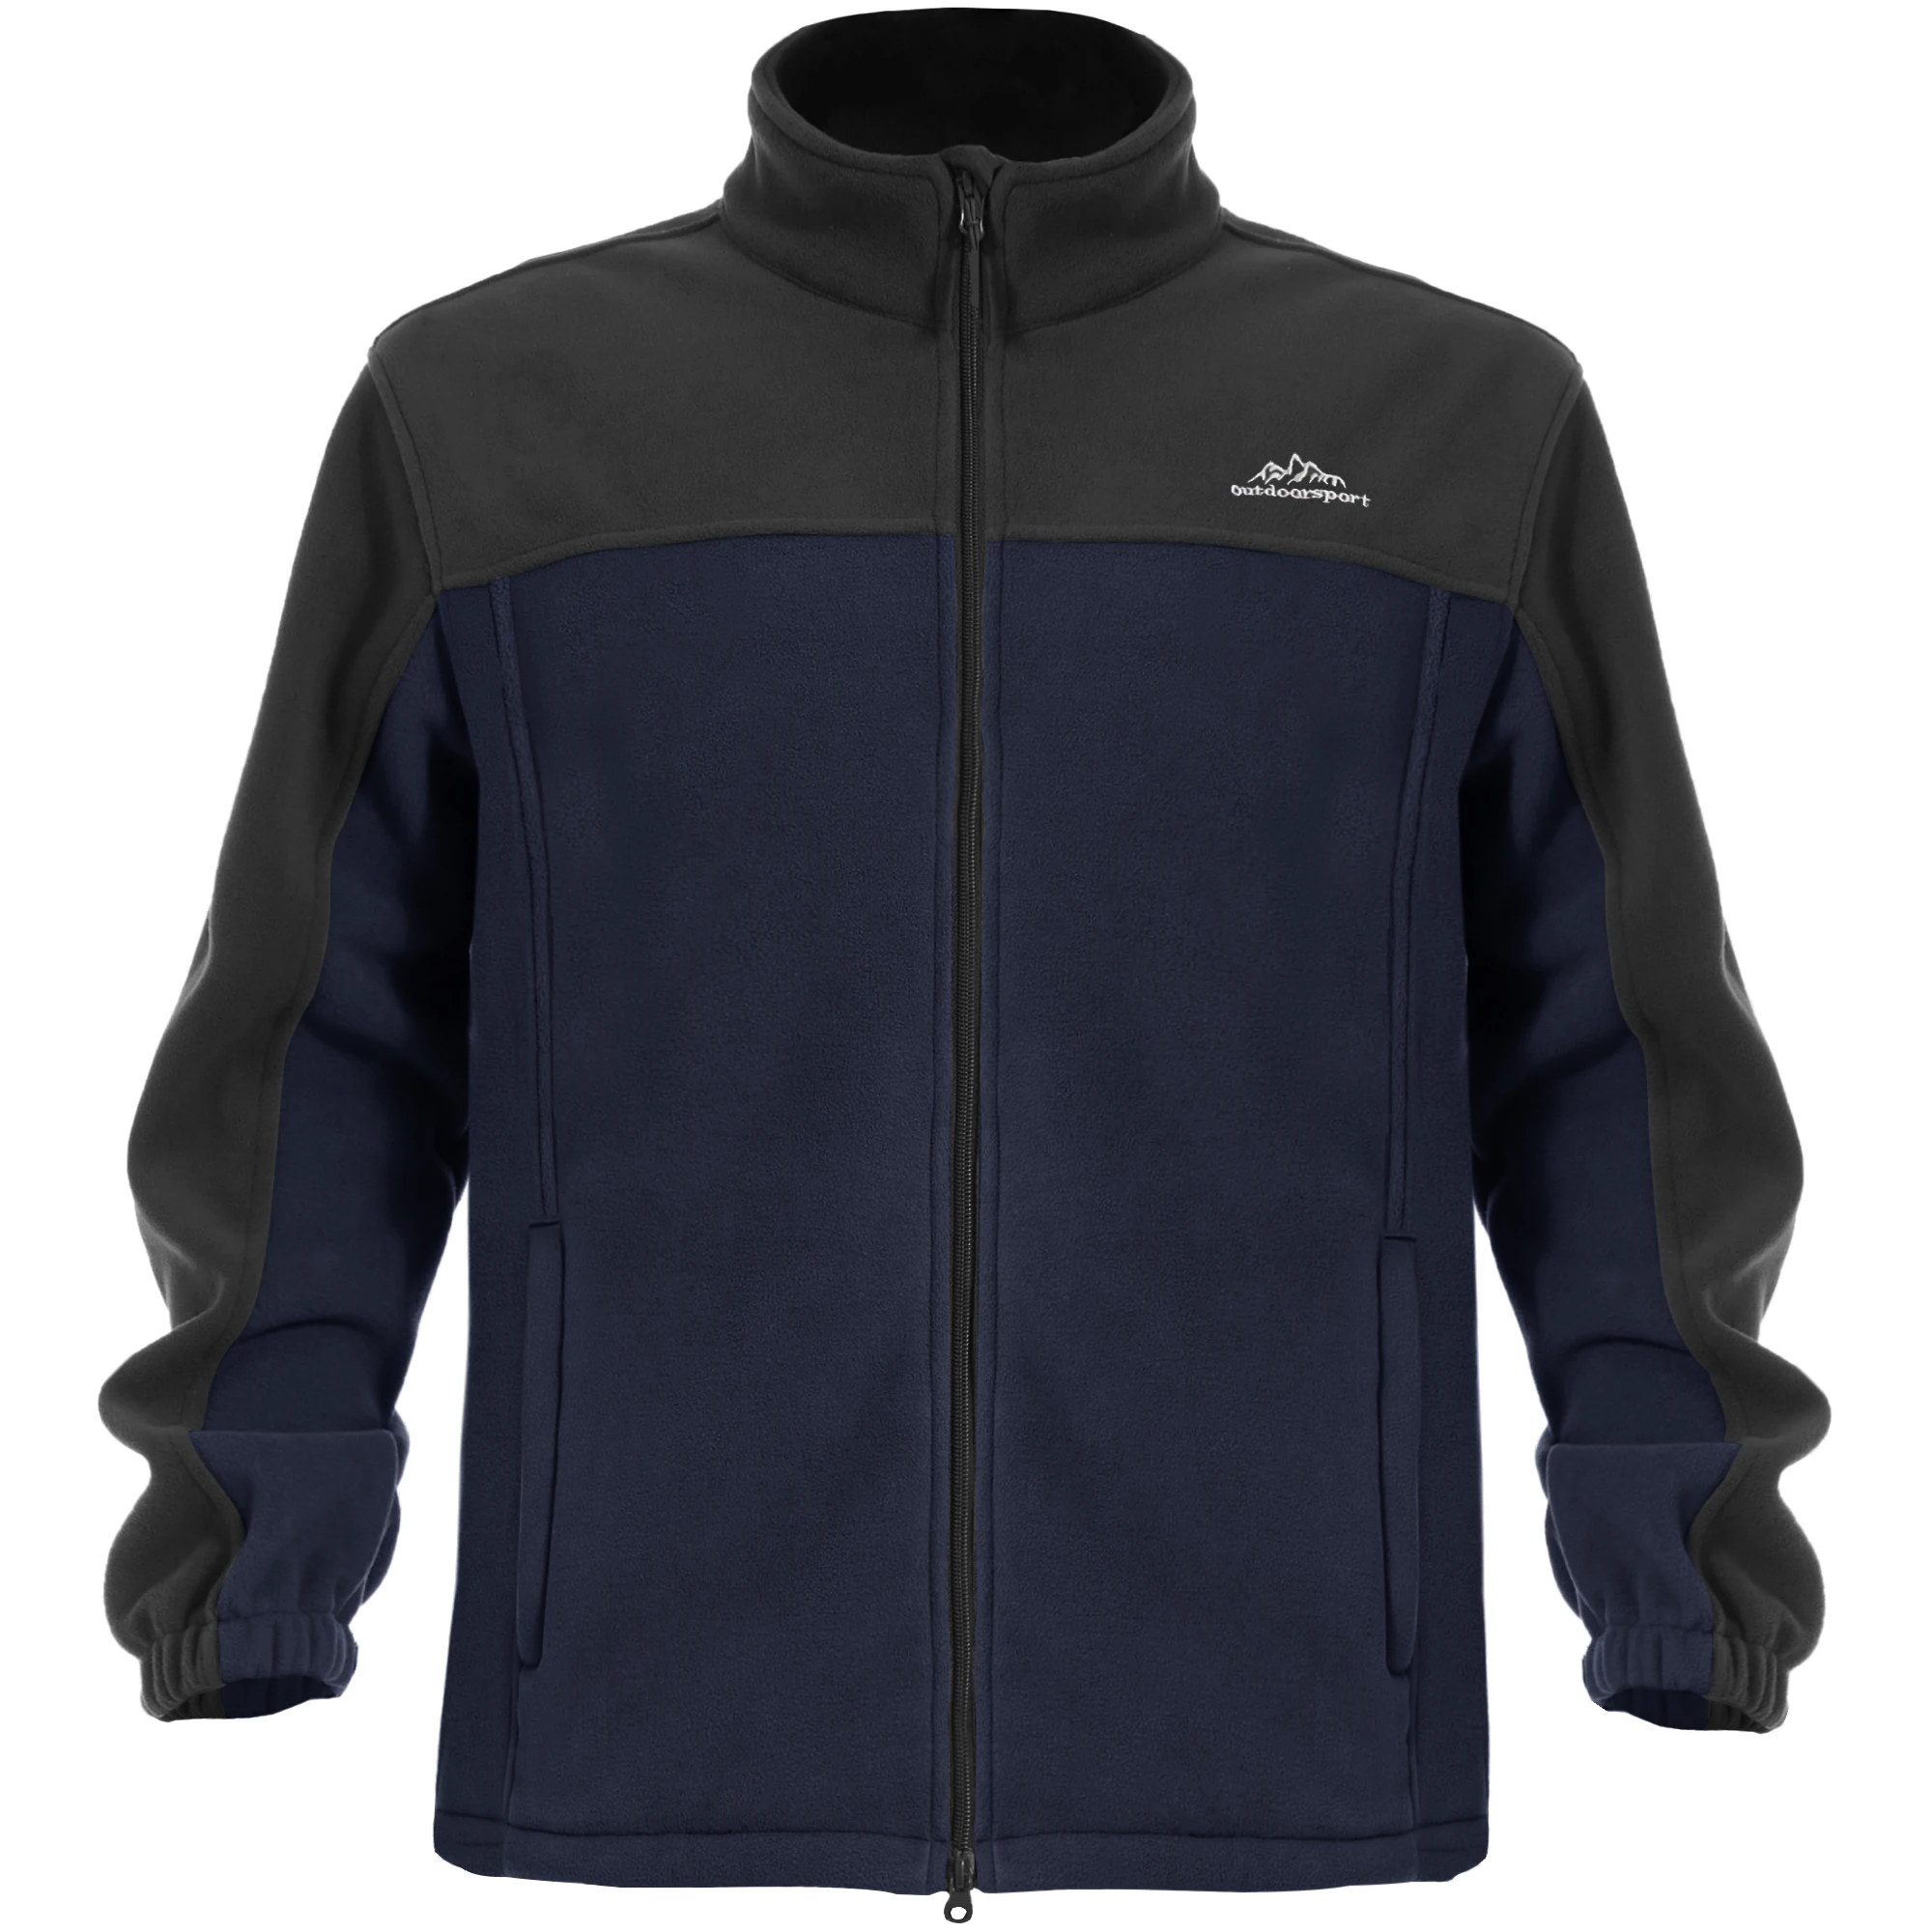 Men's Tactical Soft Shell Polar Fleece Jacket Stand Collar Windproof Hiking Jacket Coat